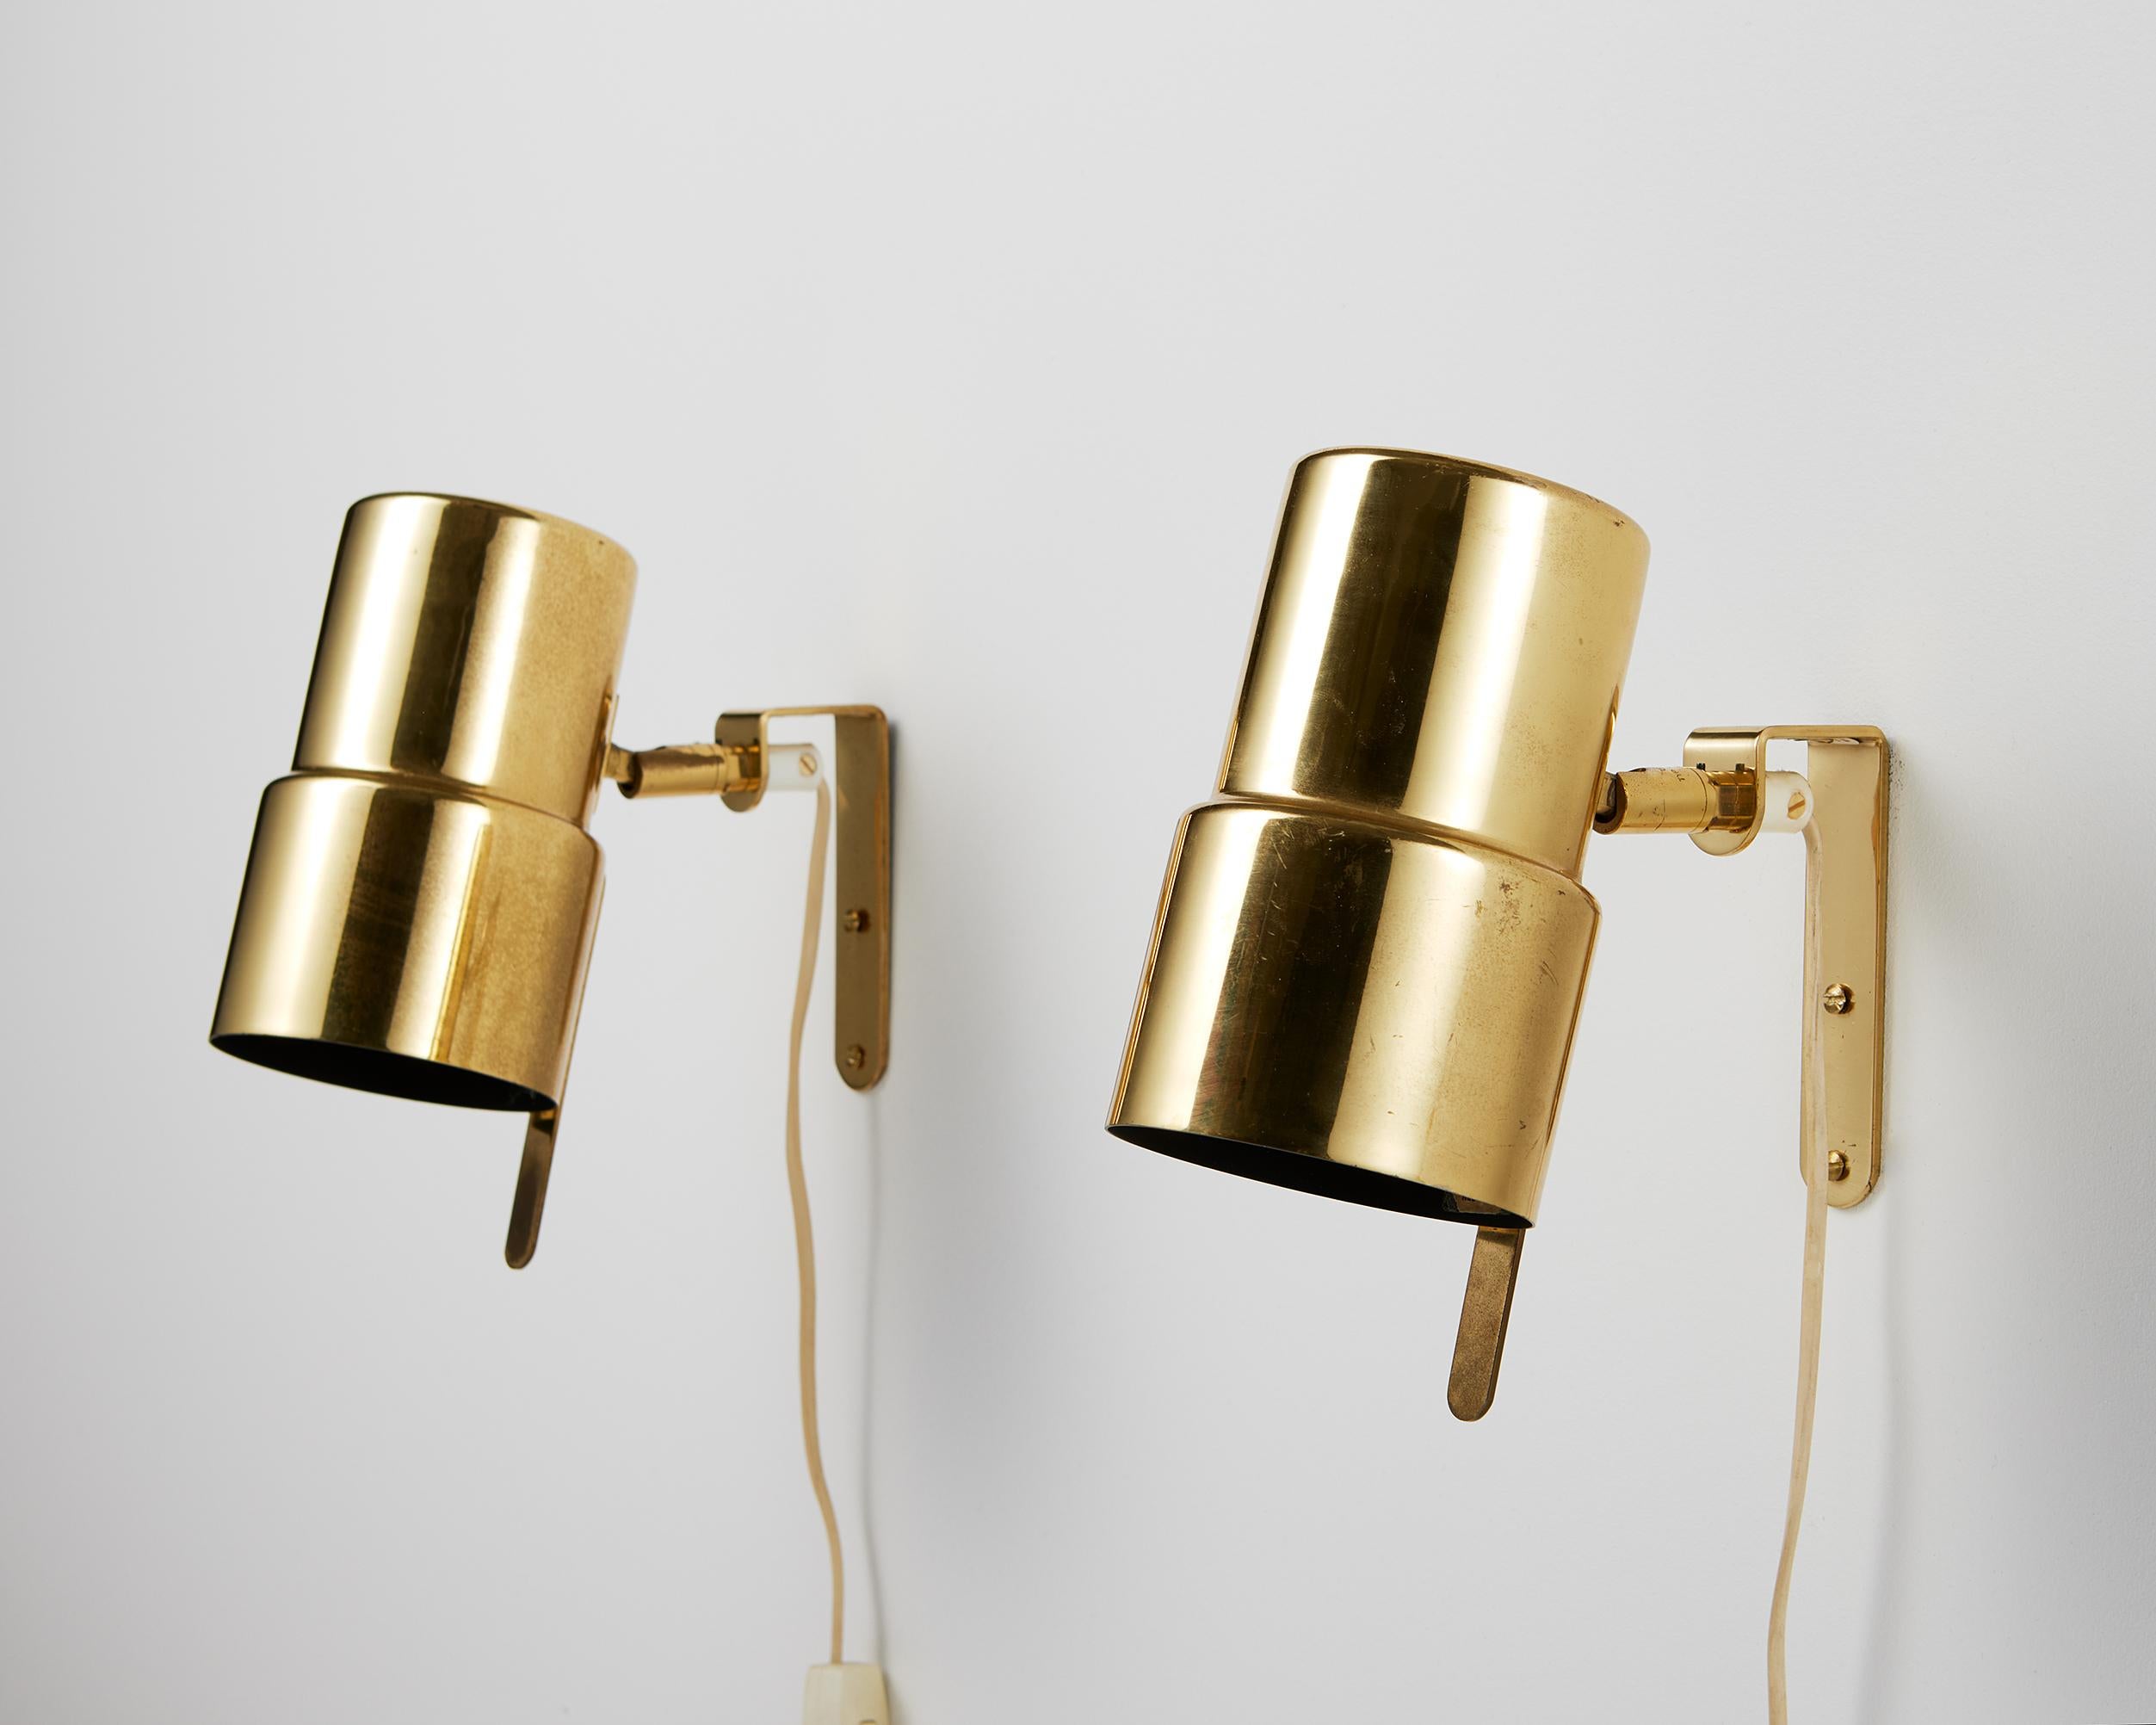 Pair of wall lamps model V-324 designed by Hans-Agne Jakobsson,
Sweden. 1960s.
Polished brass.

Measures: H: 10 cm / 4